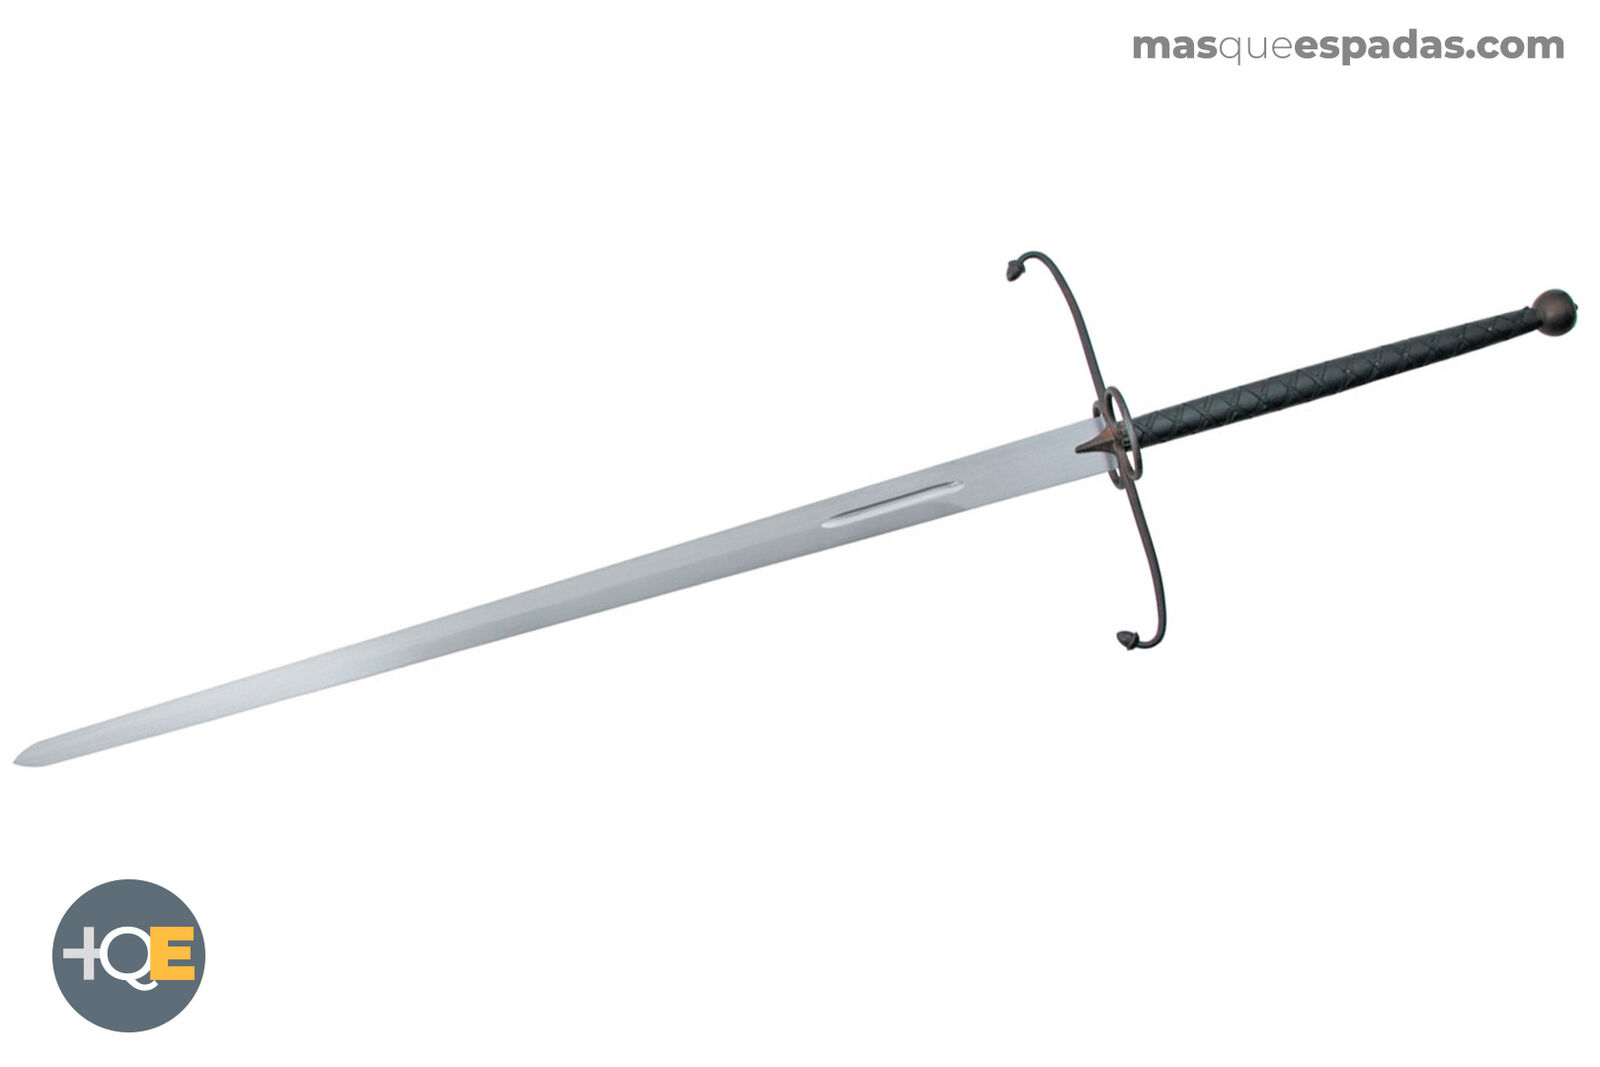 Lowlander Scottish Sword, Aged